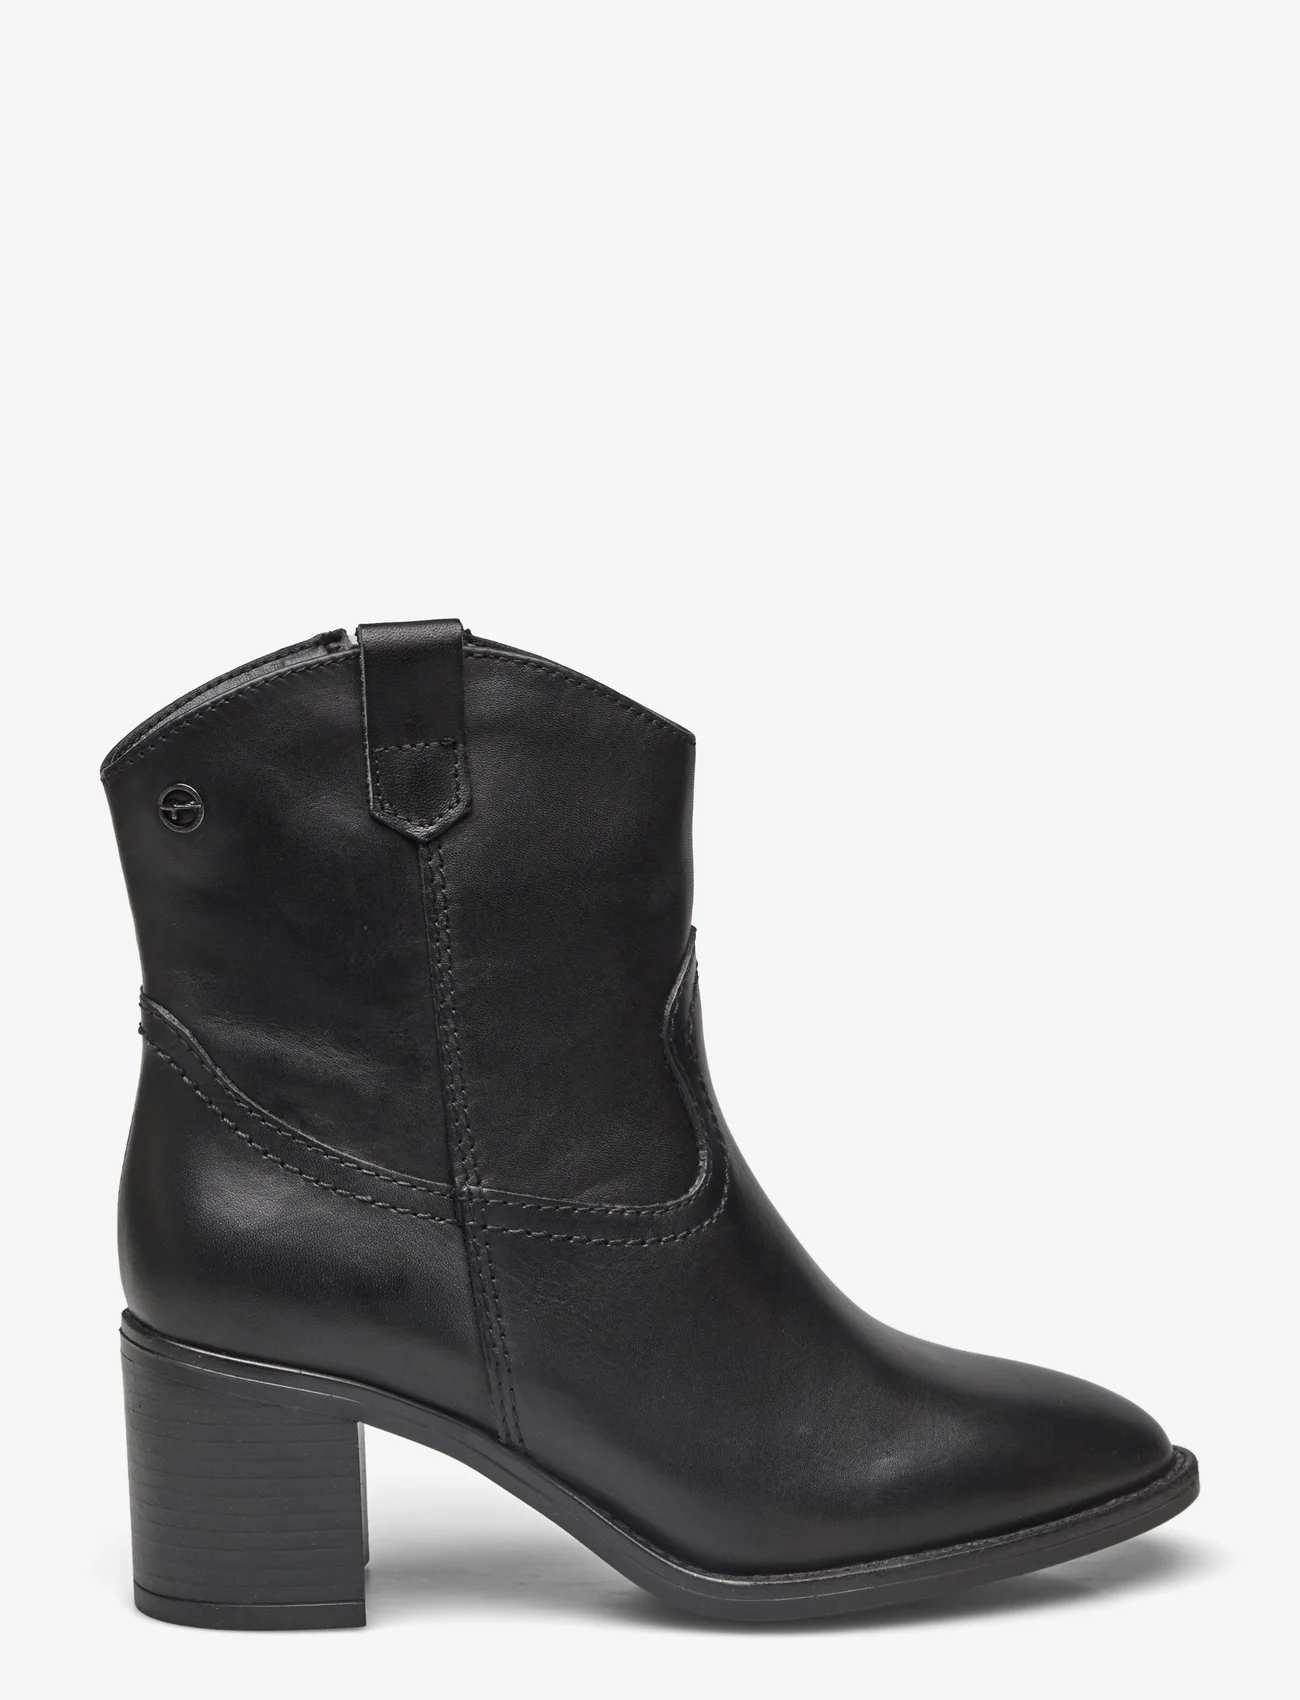 Tamaris - Women Boots - high heel - black leather - 1